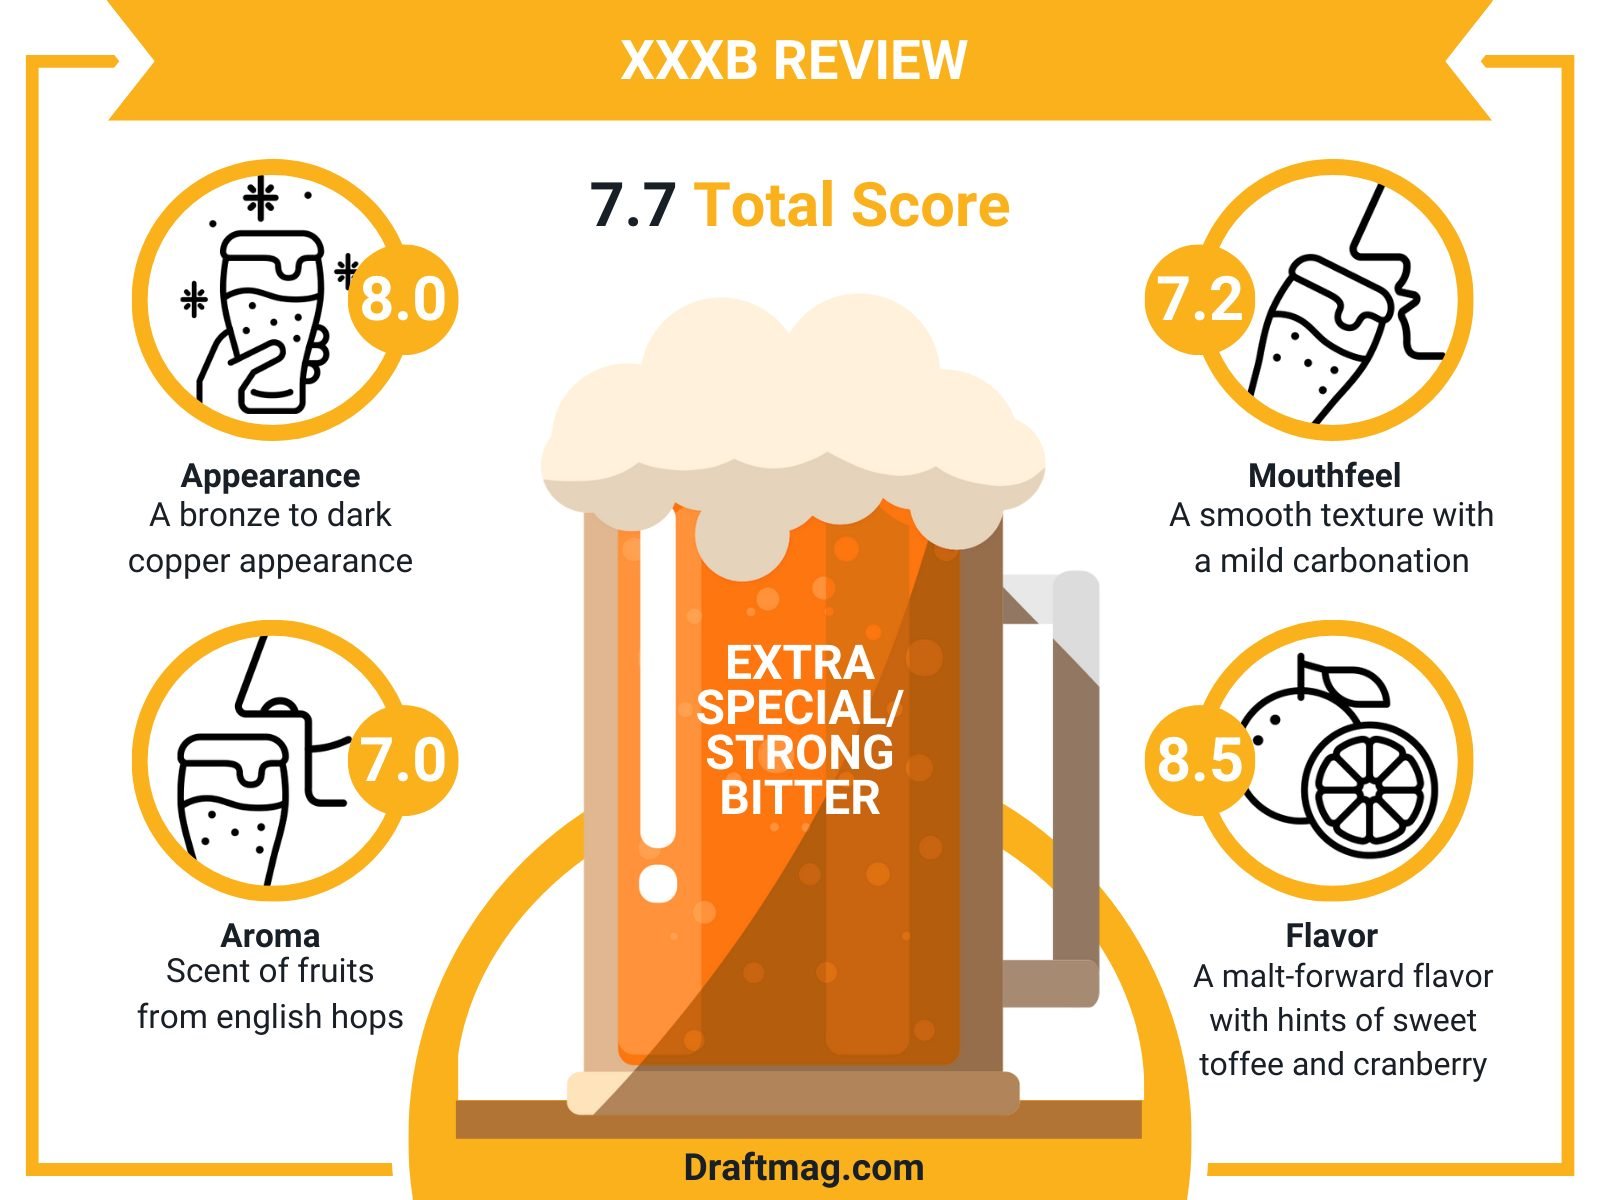 XXXB Review Infographic